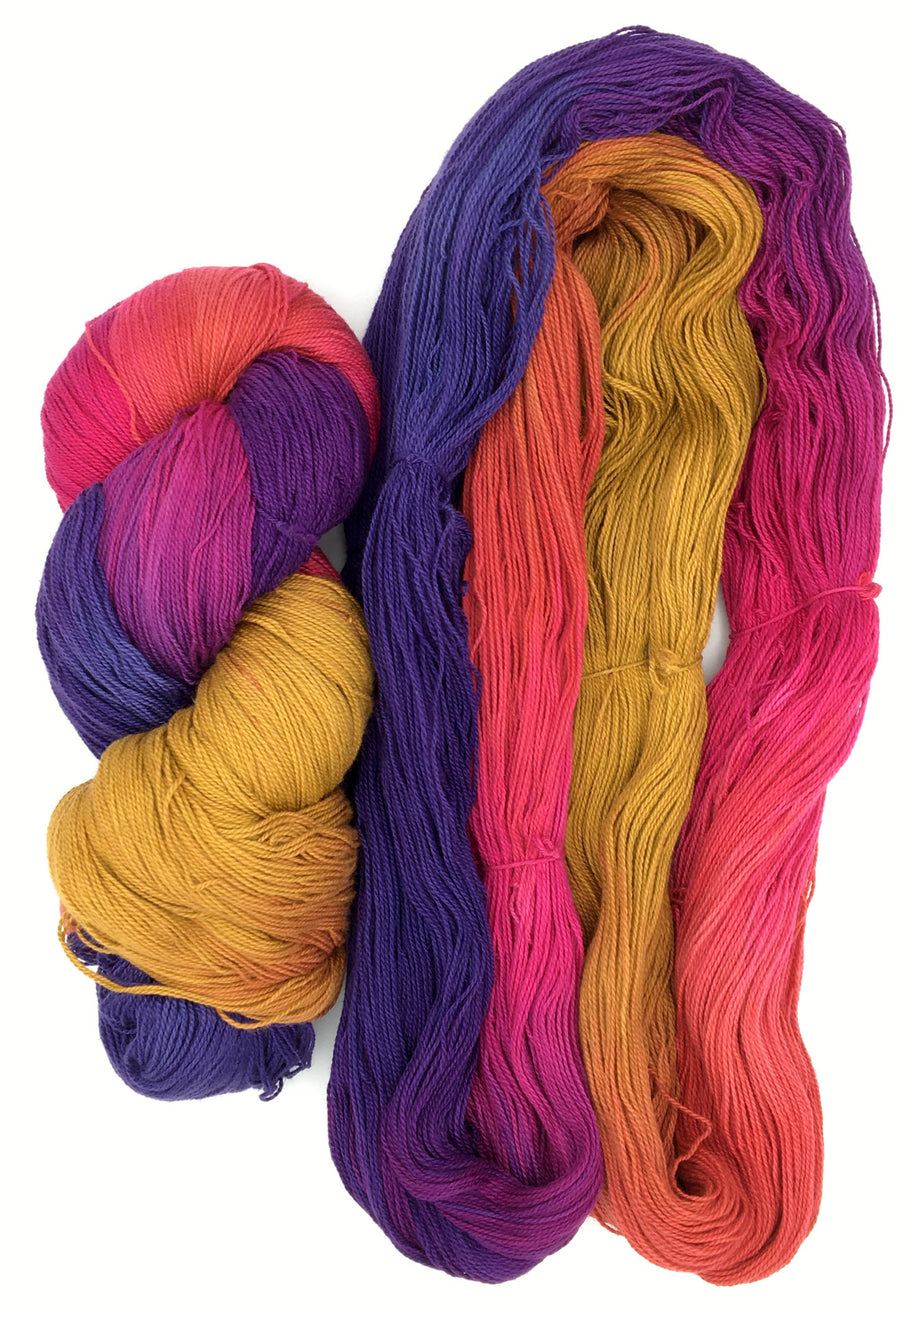 Iris Craft Thread Lot 11 Skeins Variguated Colors 6 Strand Cotton App 8.7  yds ea